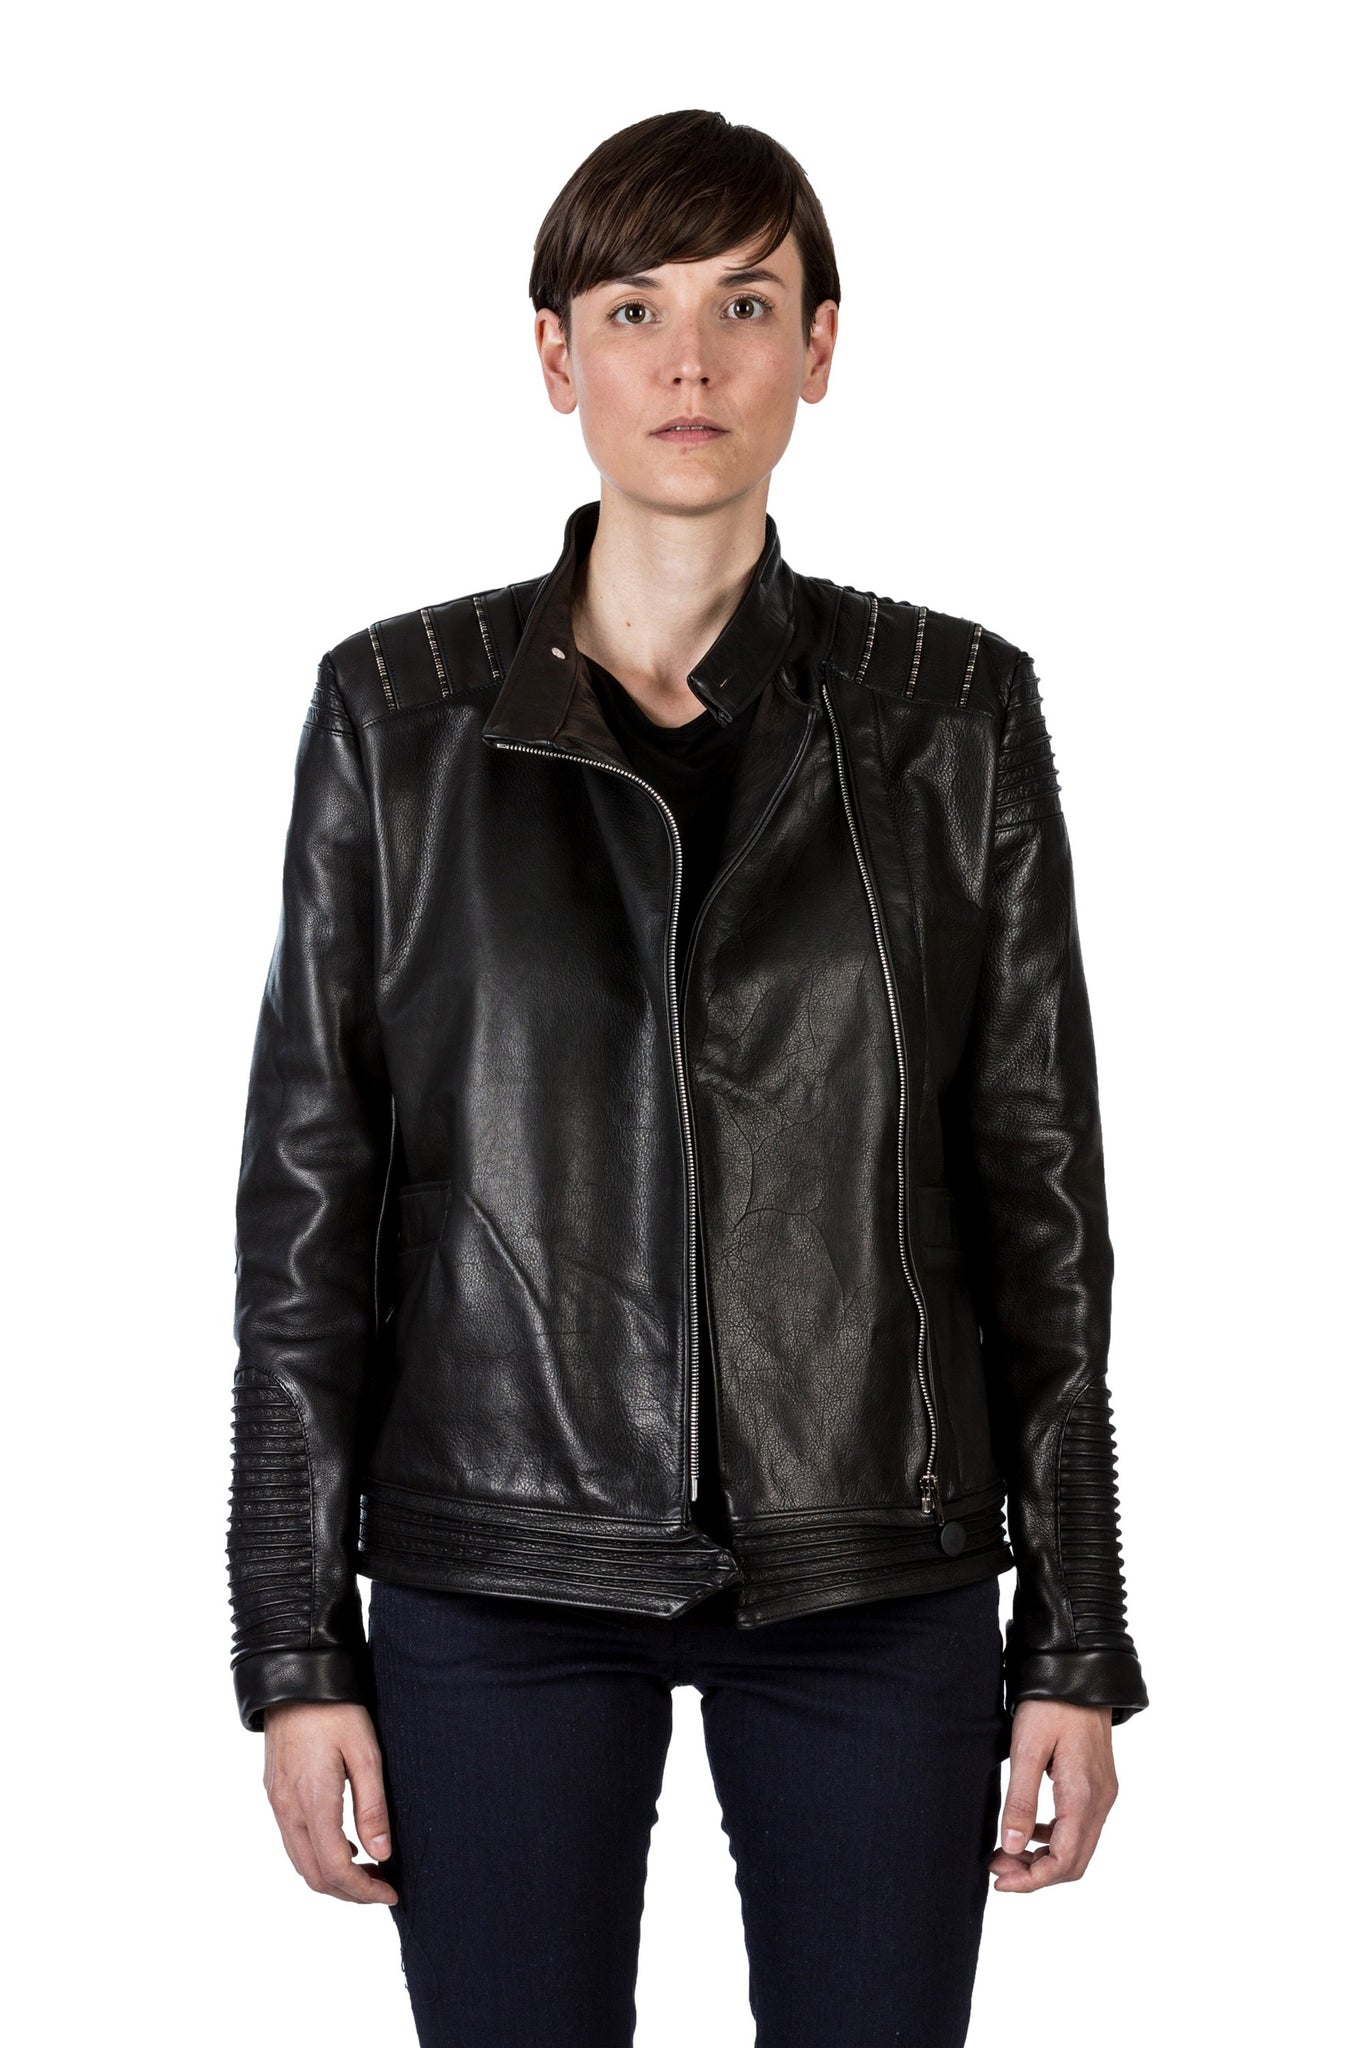 neat's leather, Rindsleder, Lederjacke, leather, leather jacket, biker, biker jacket, schwarz, black, women's clothing,